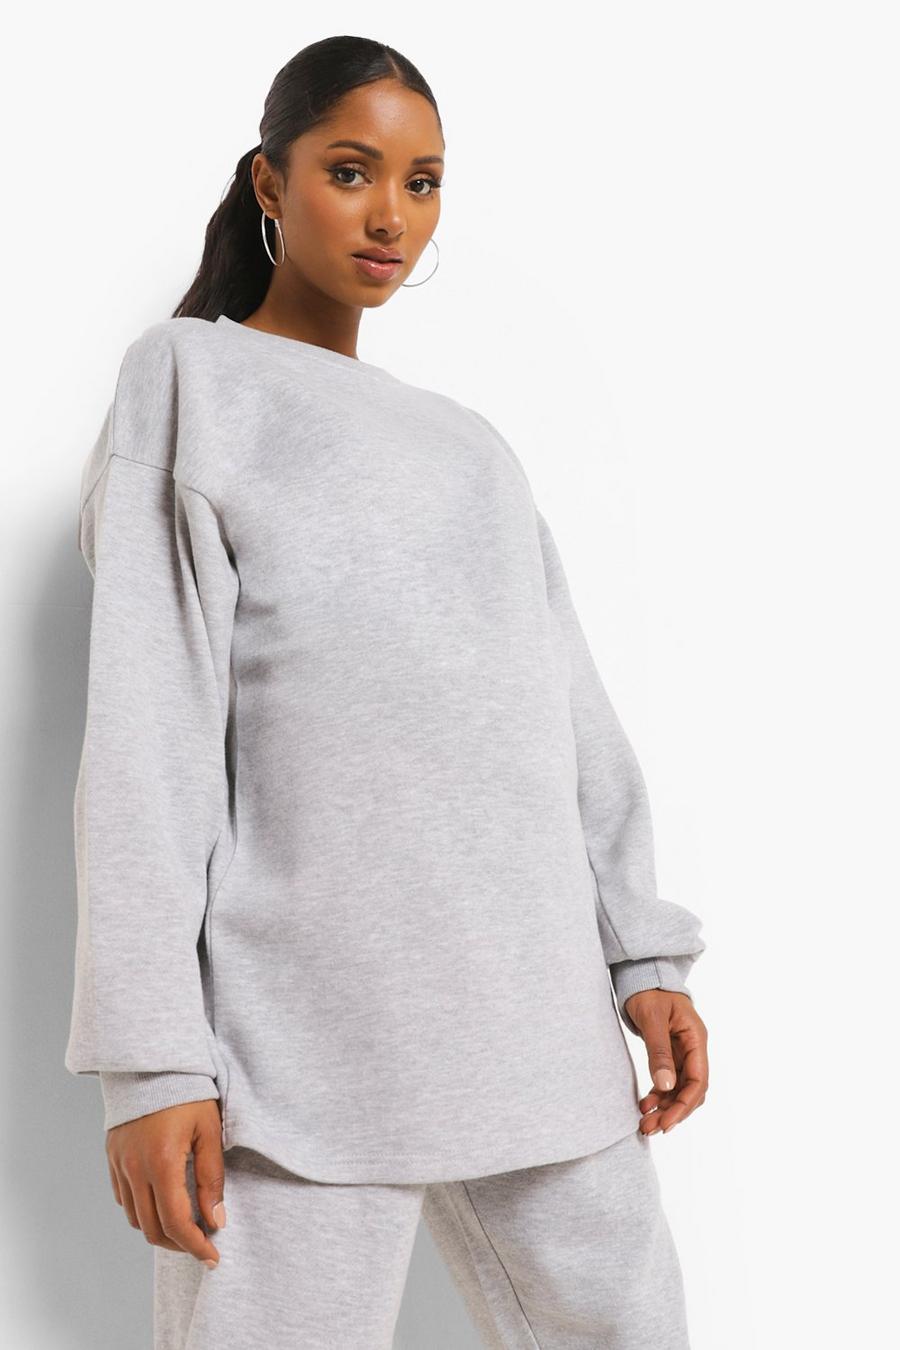 Umstandsmode Oversize Rundhals-Sweatshirt, Grau meliert gris